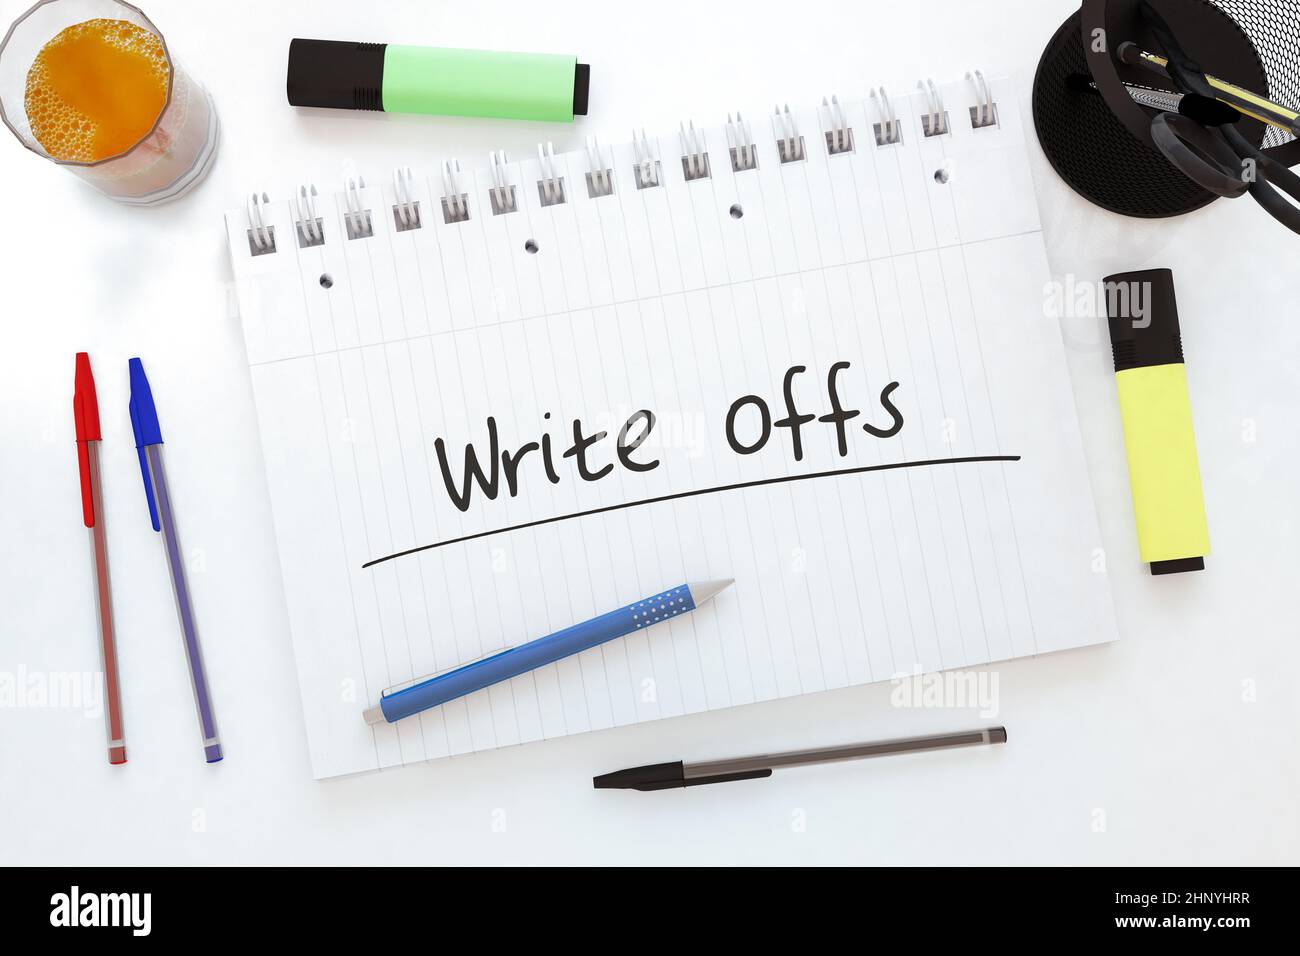 Write offs - handwritten text in a notebook on a desk - 3d render illustration. Stock Photo